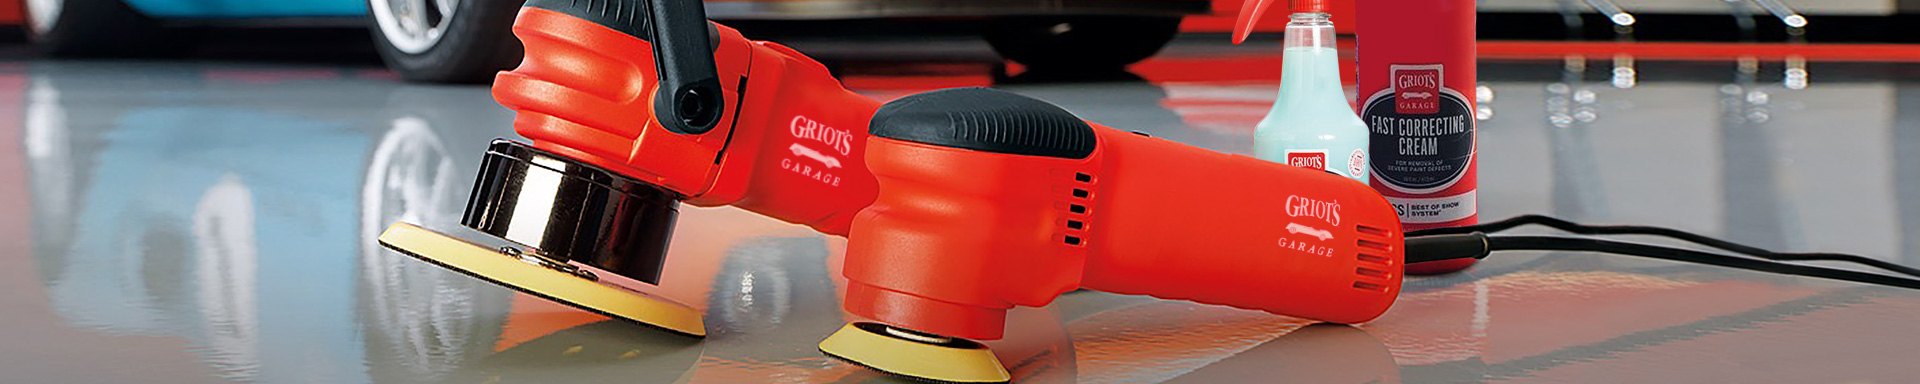 Griot's Garage Tape & Masking Supplies